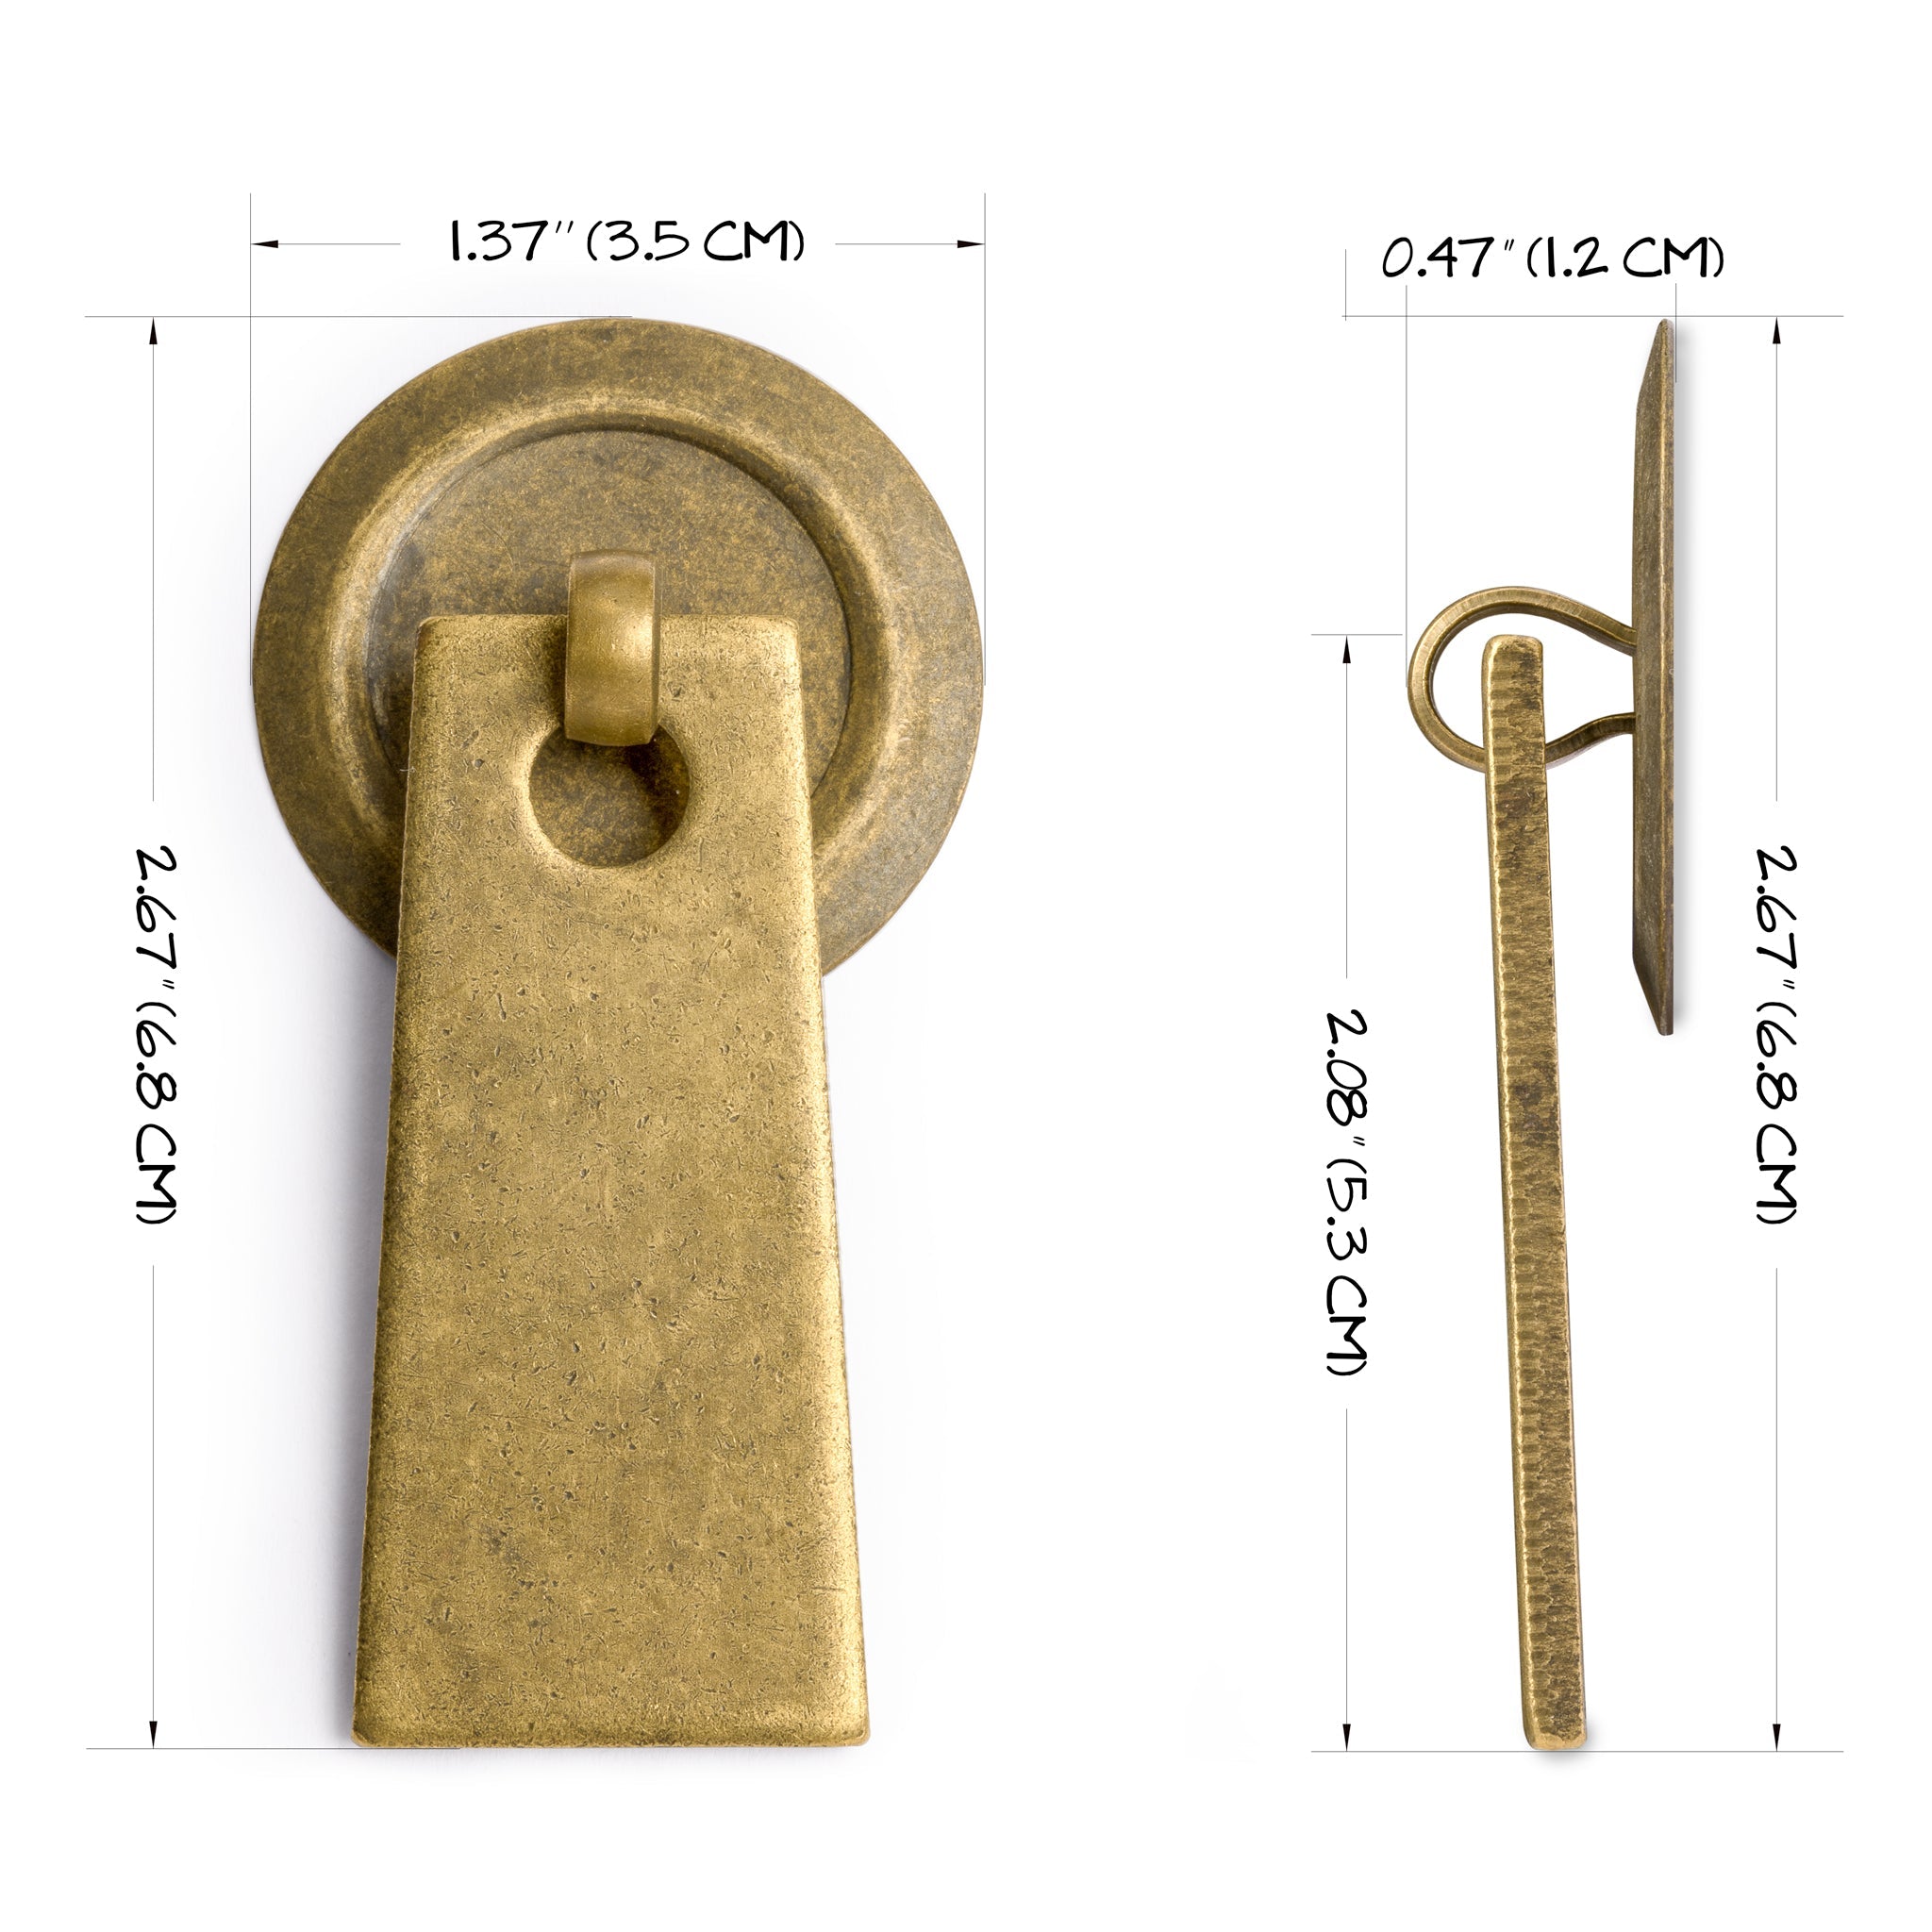 Single Leaf Pulls 2" - Set of 2-Chinese Brass Hardware